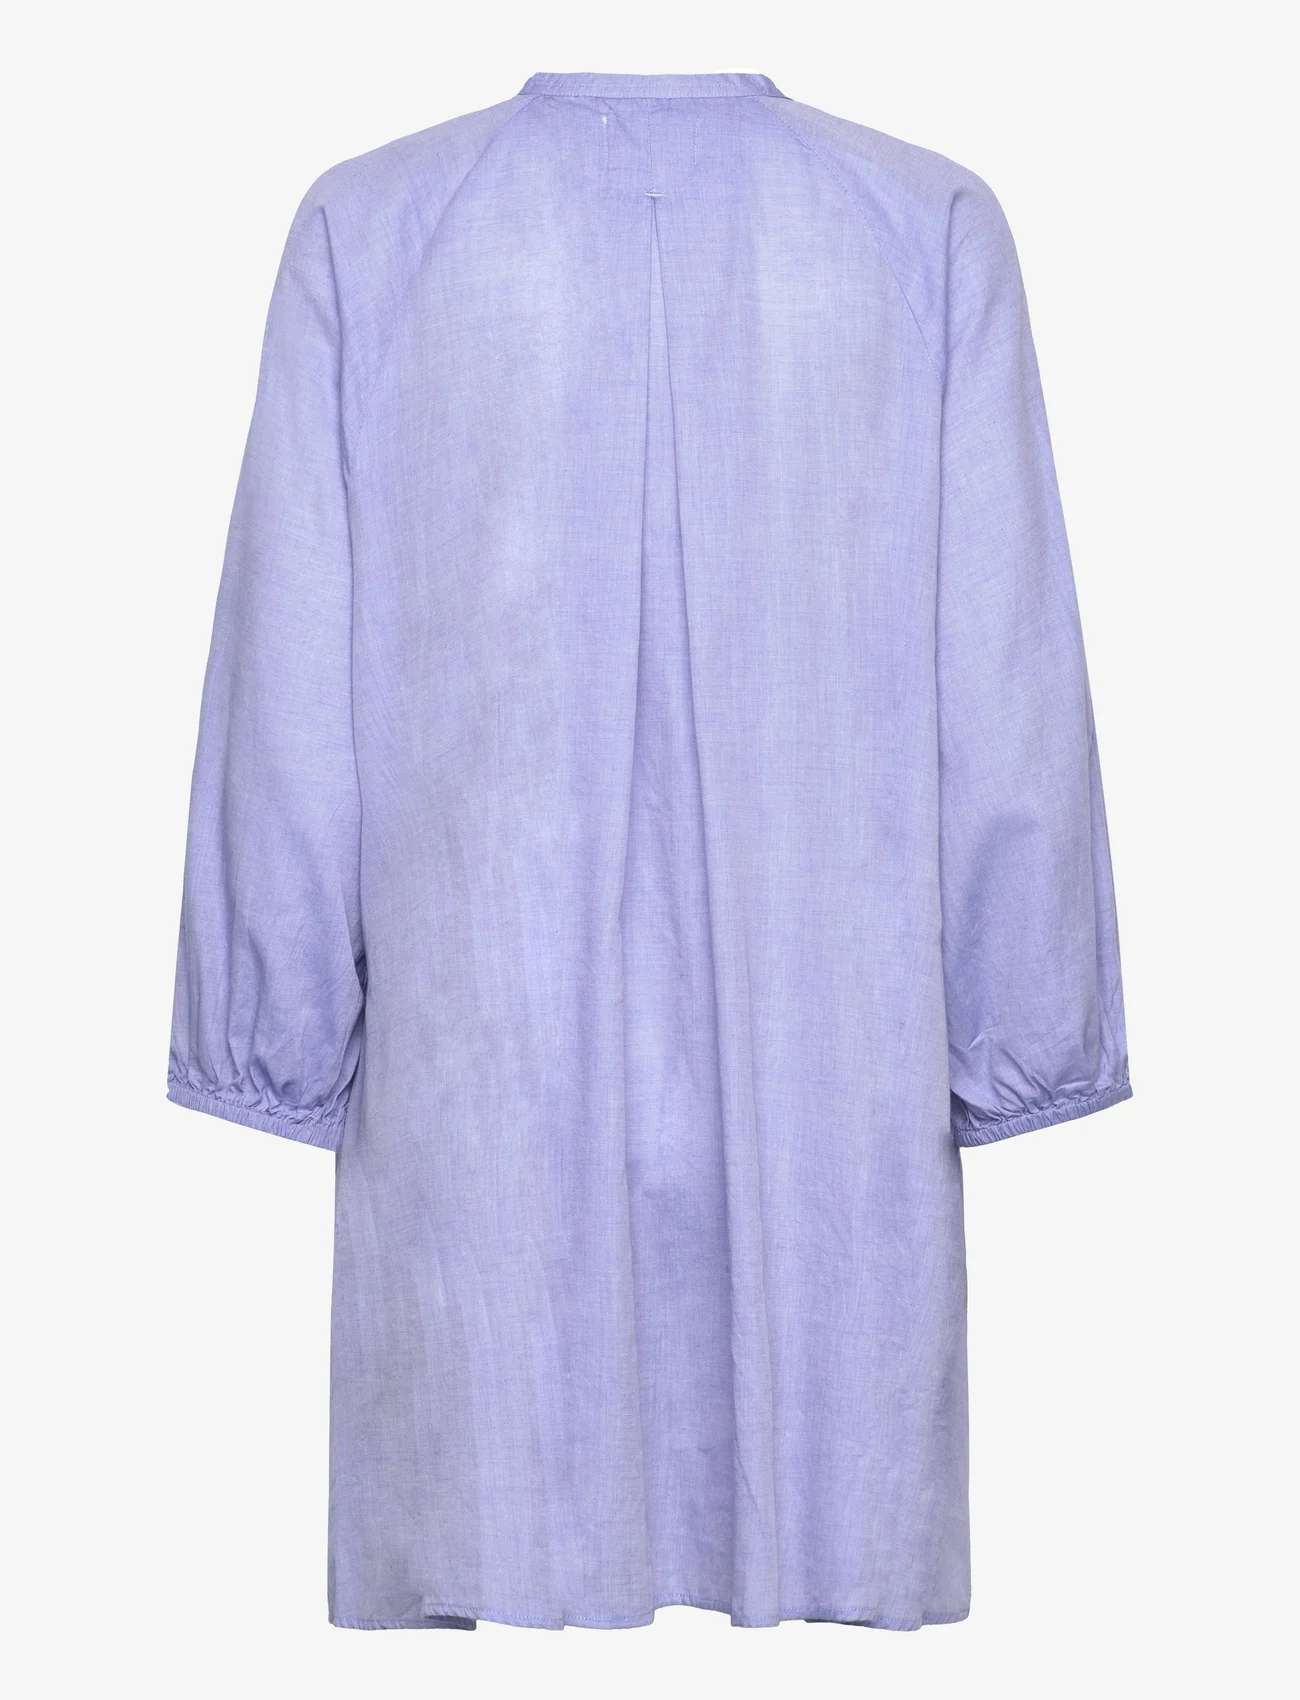 Moshi Moshi Mind - luna tunic dress chambray - krótkie sukienki - light blue - 1